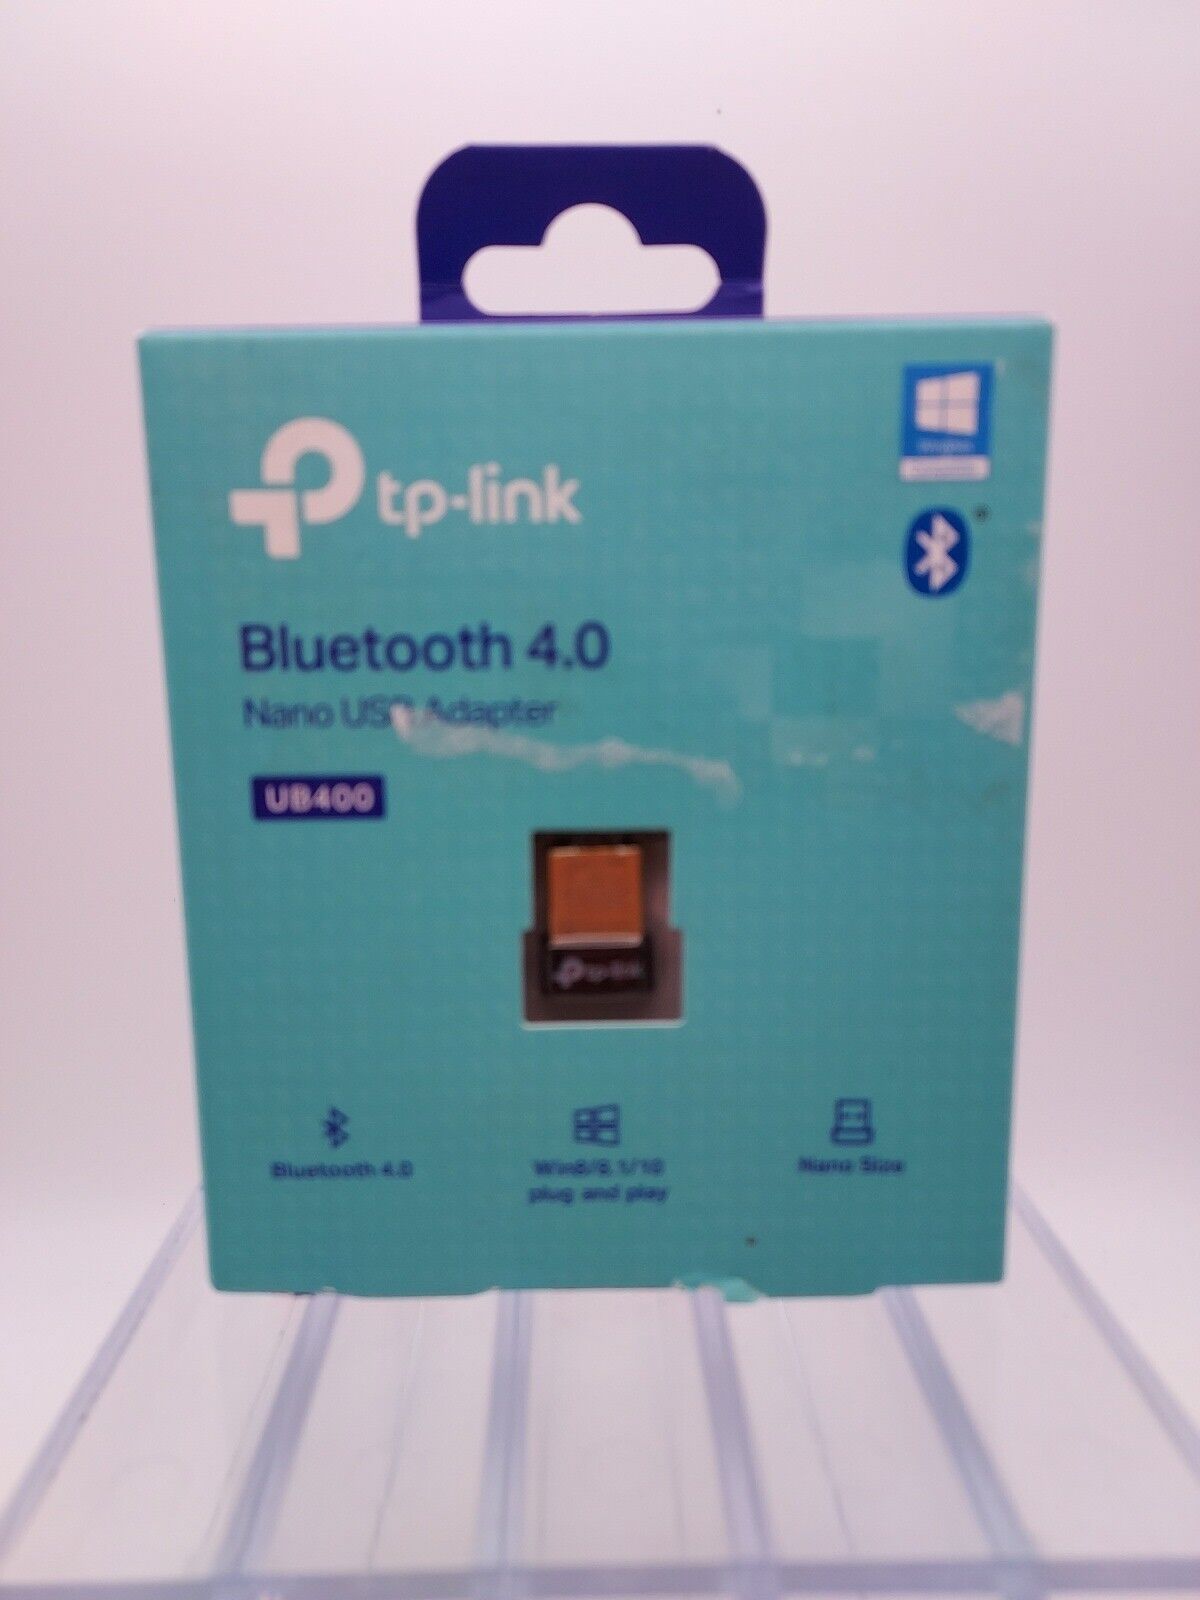 TP-Link UB400 Bluetooth 4.0 Nano USB Adapter (Windows 8/8.1/10), Open Box